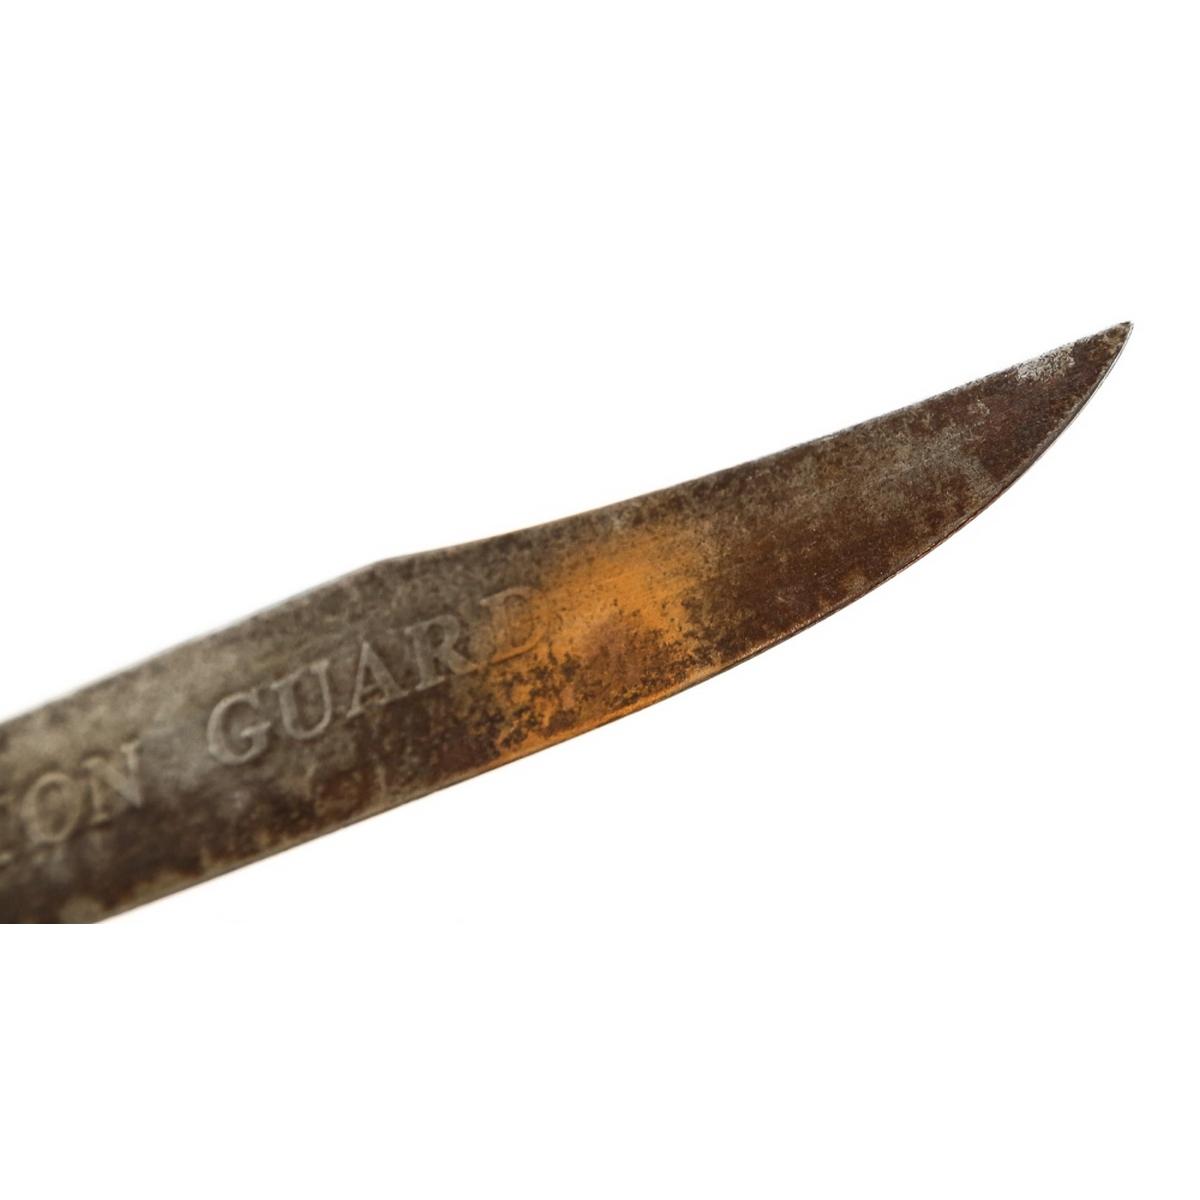 1863 Long Knife Marked "Charleston Guard"